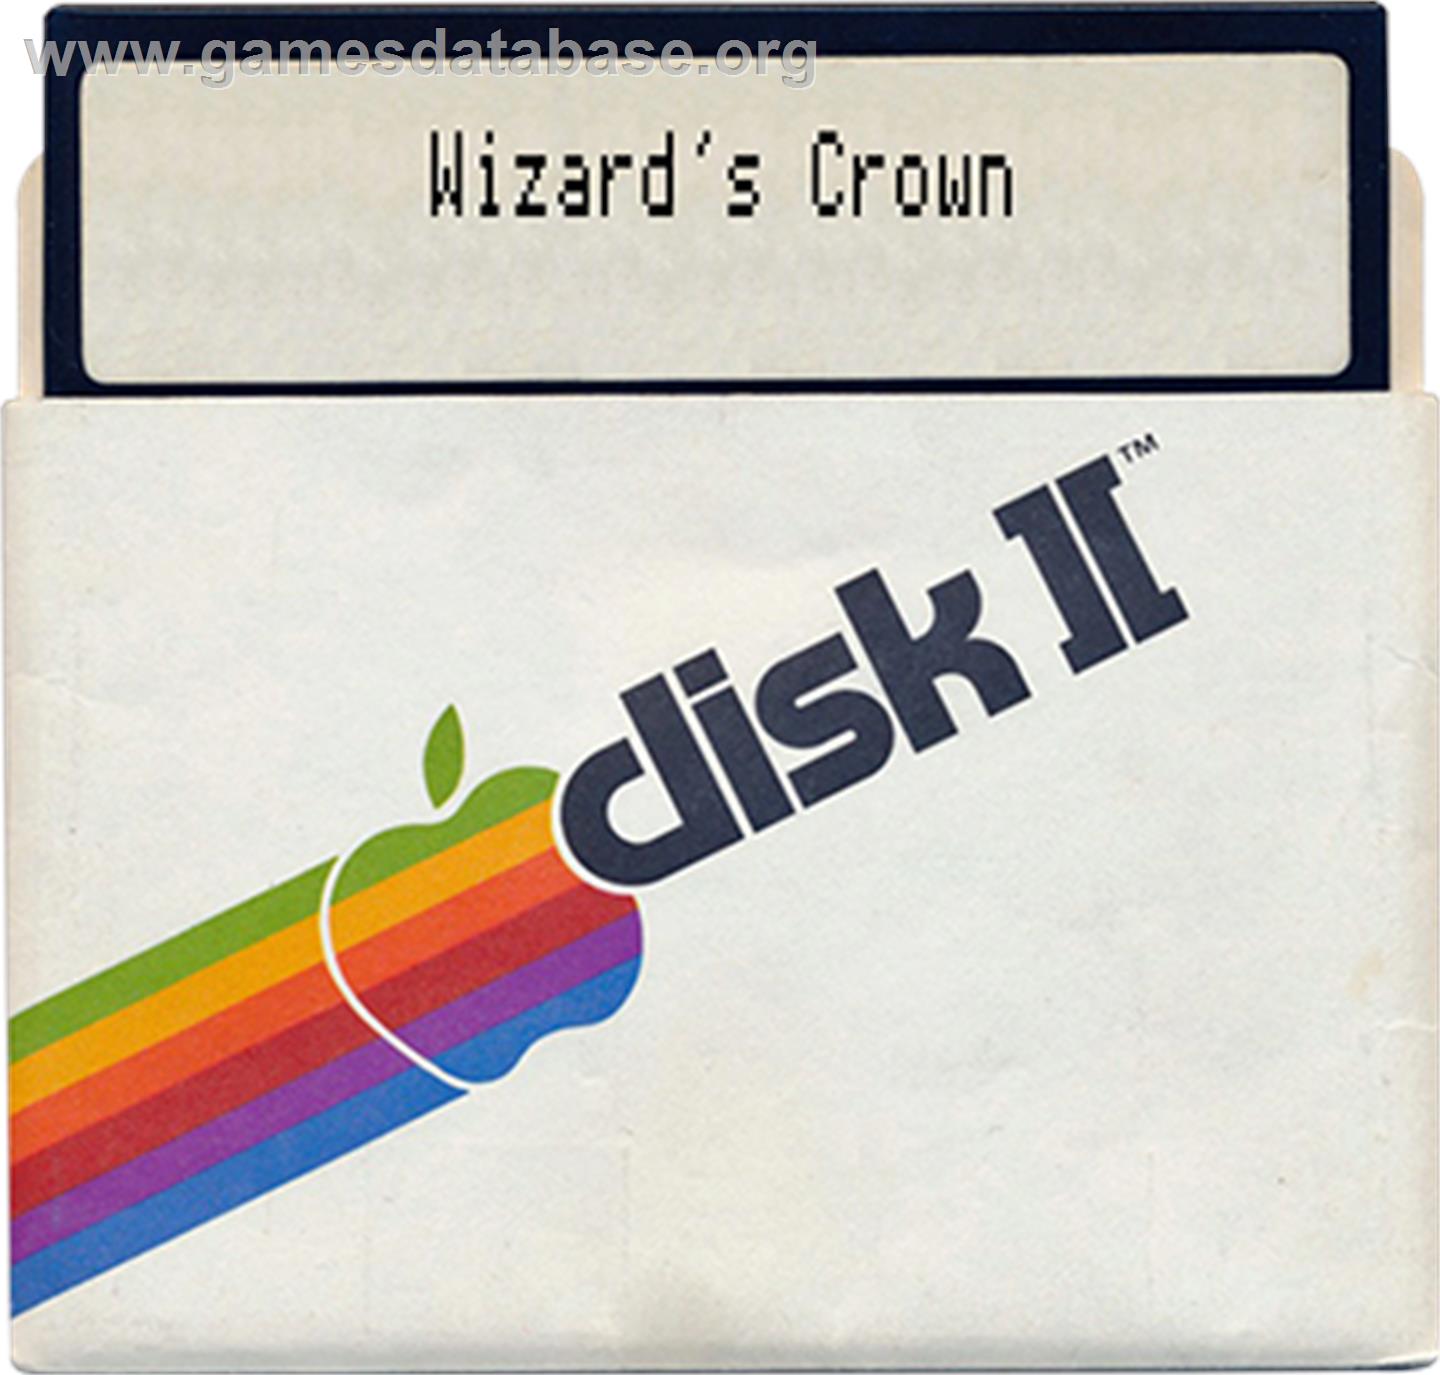 Wizard's Crown - Apple II - Artwork - Disc